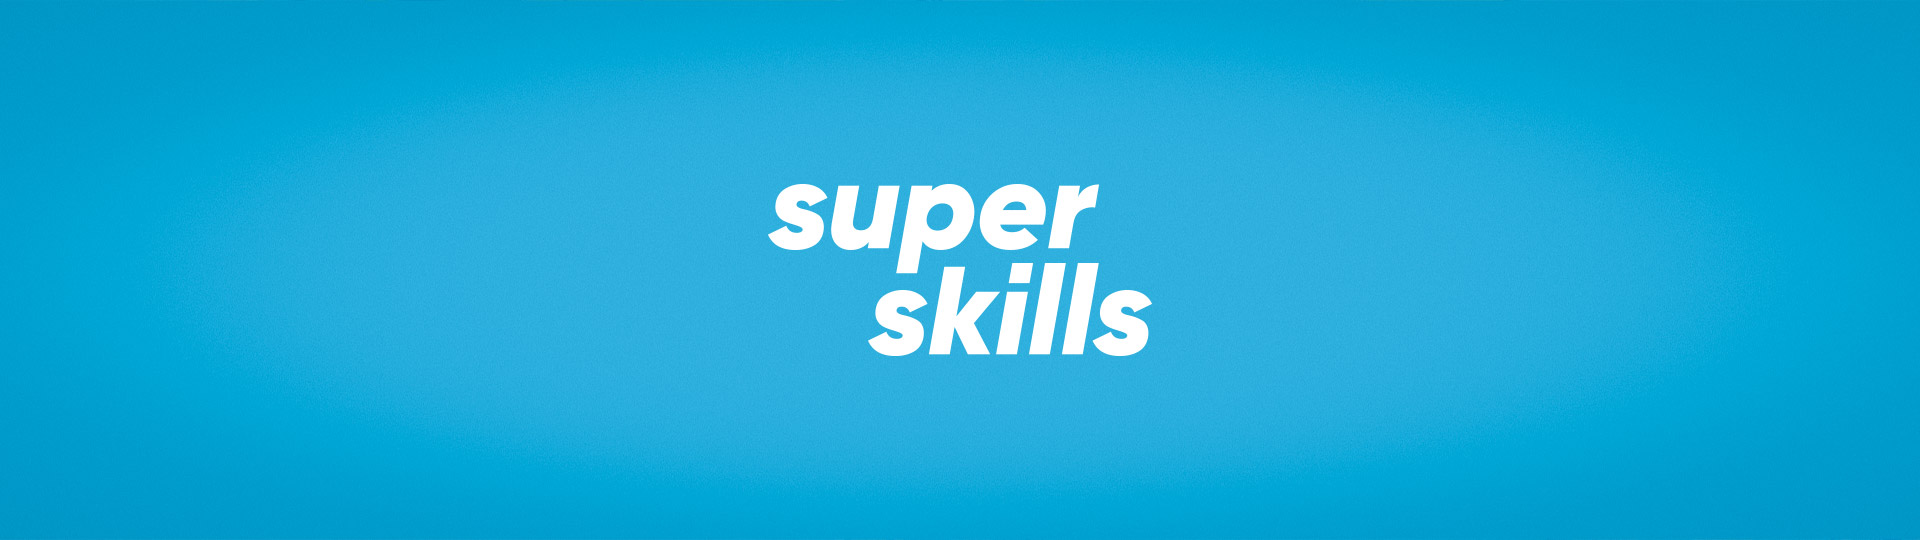 Super Skills image